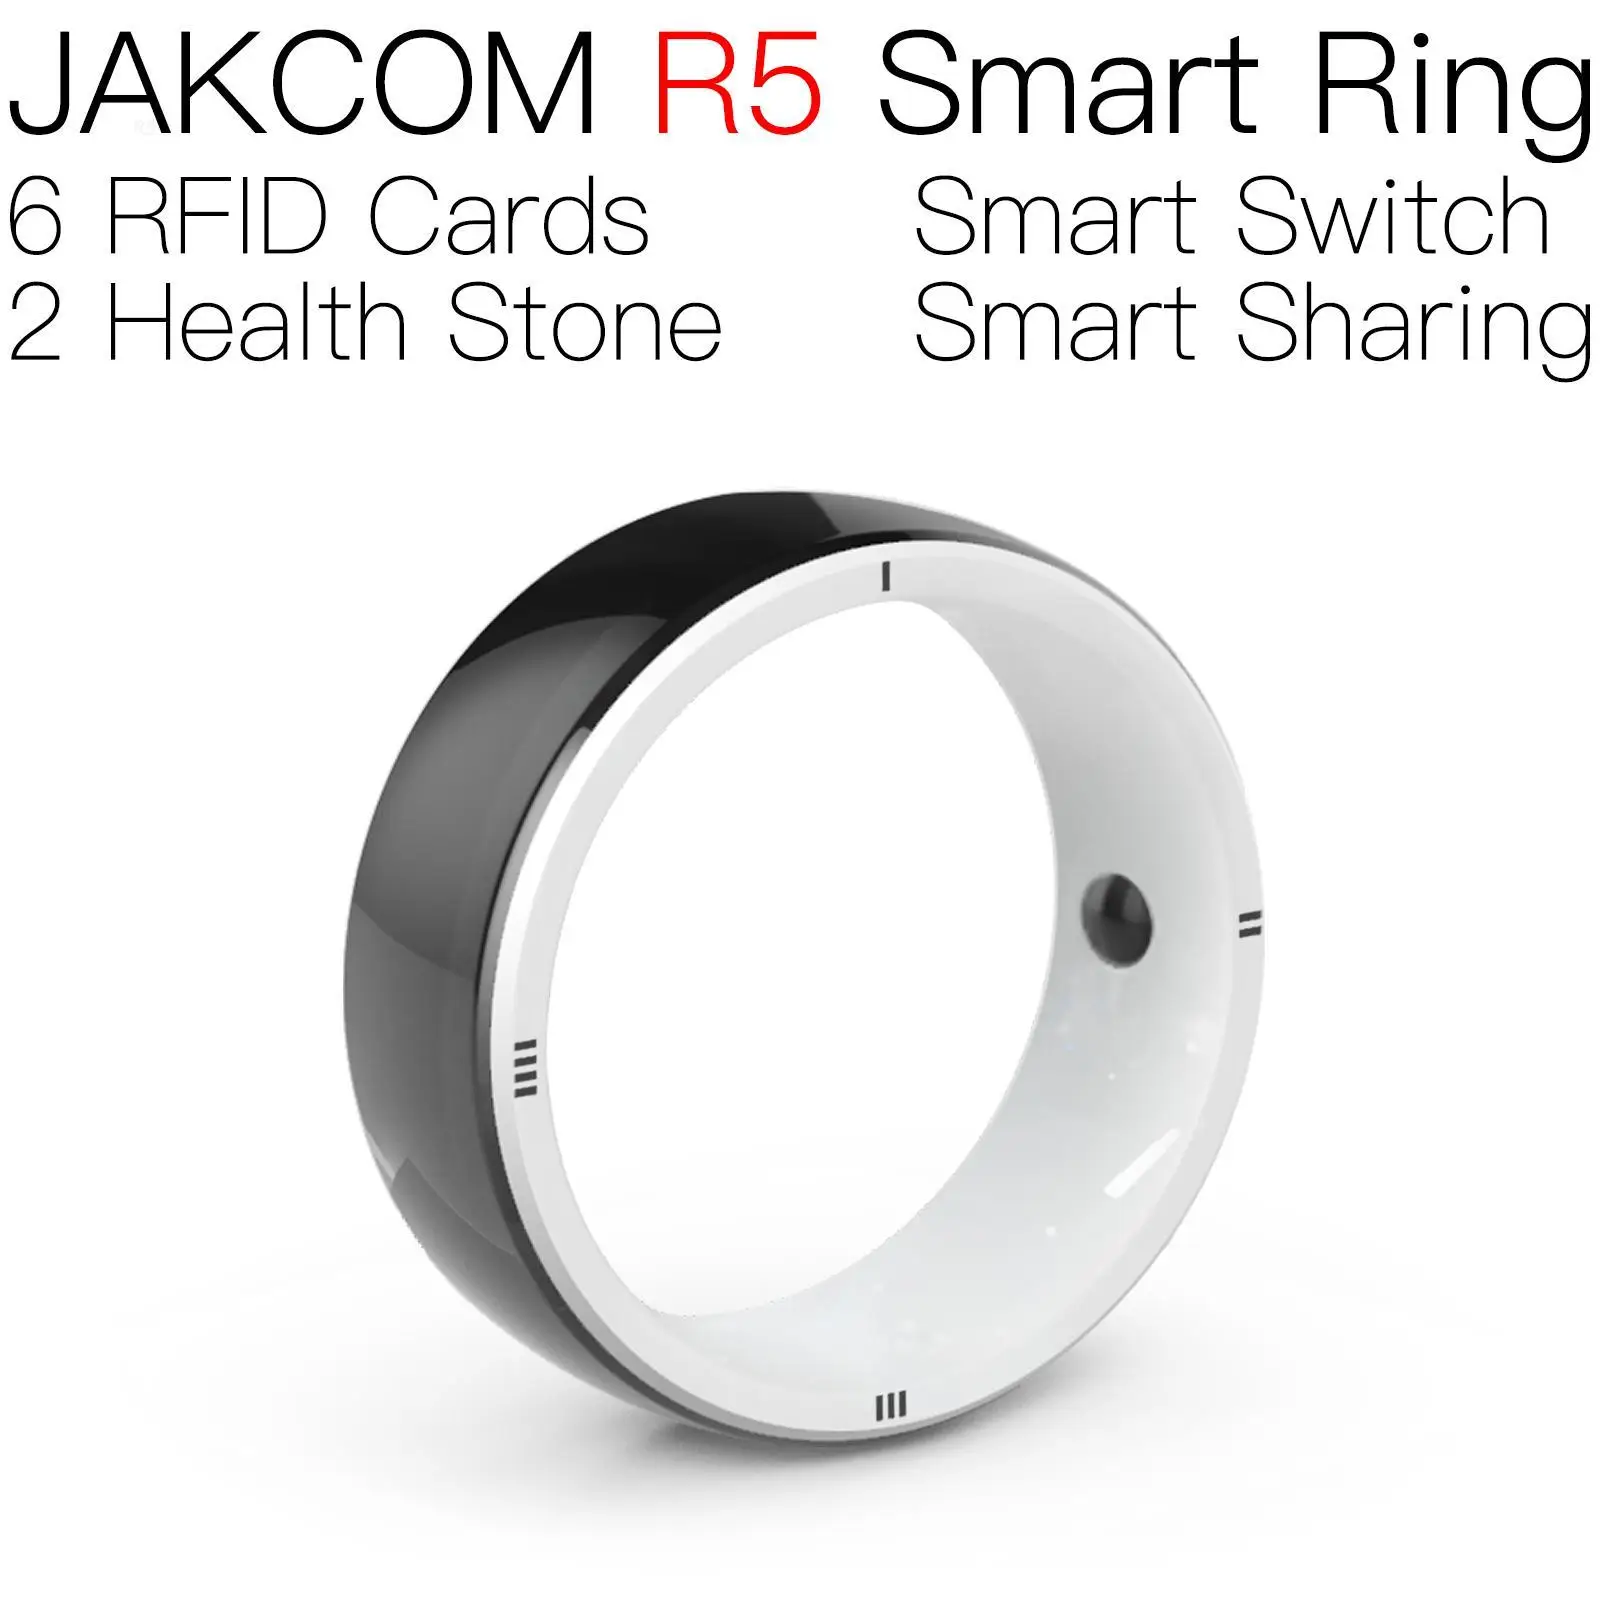 

JAKCOM R5 Smart Ring Newer than resort cherry break custom id card rubber rfid pet fish long range uhf tag sticker labels